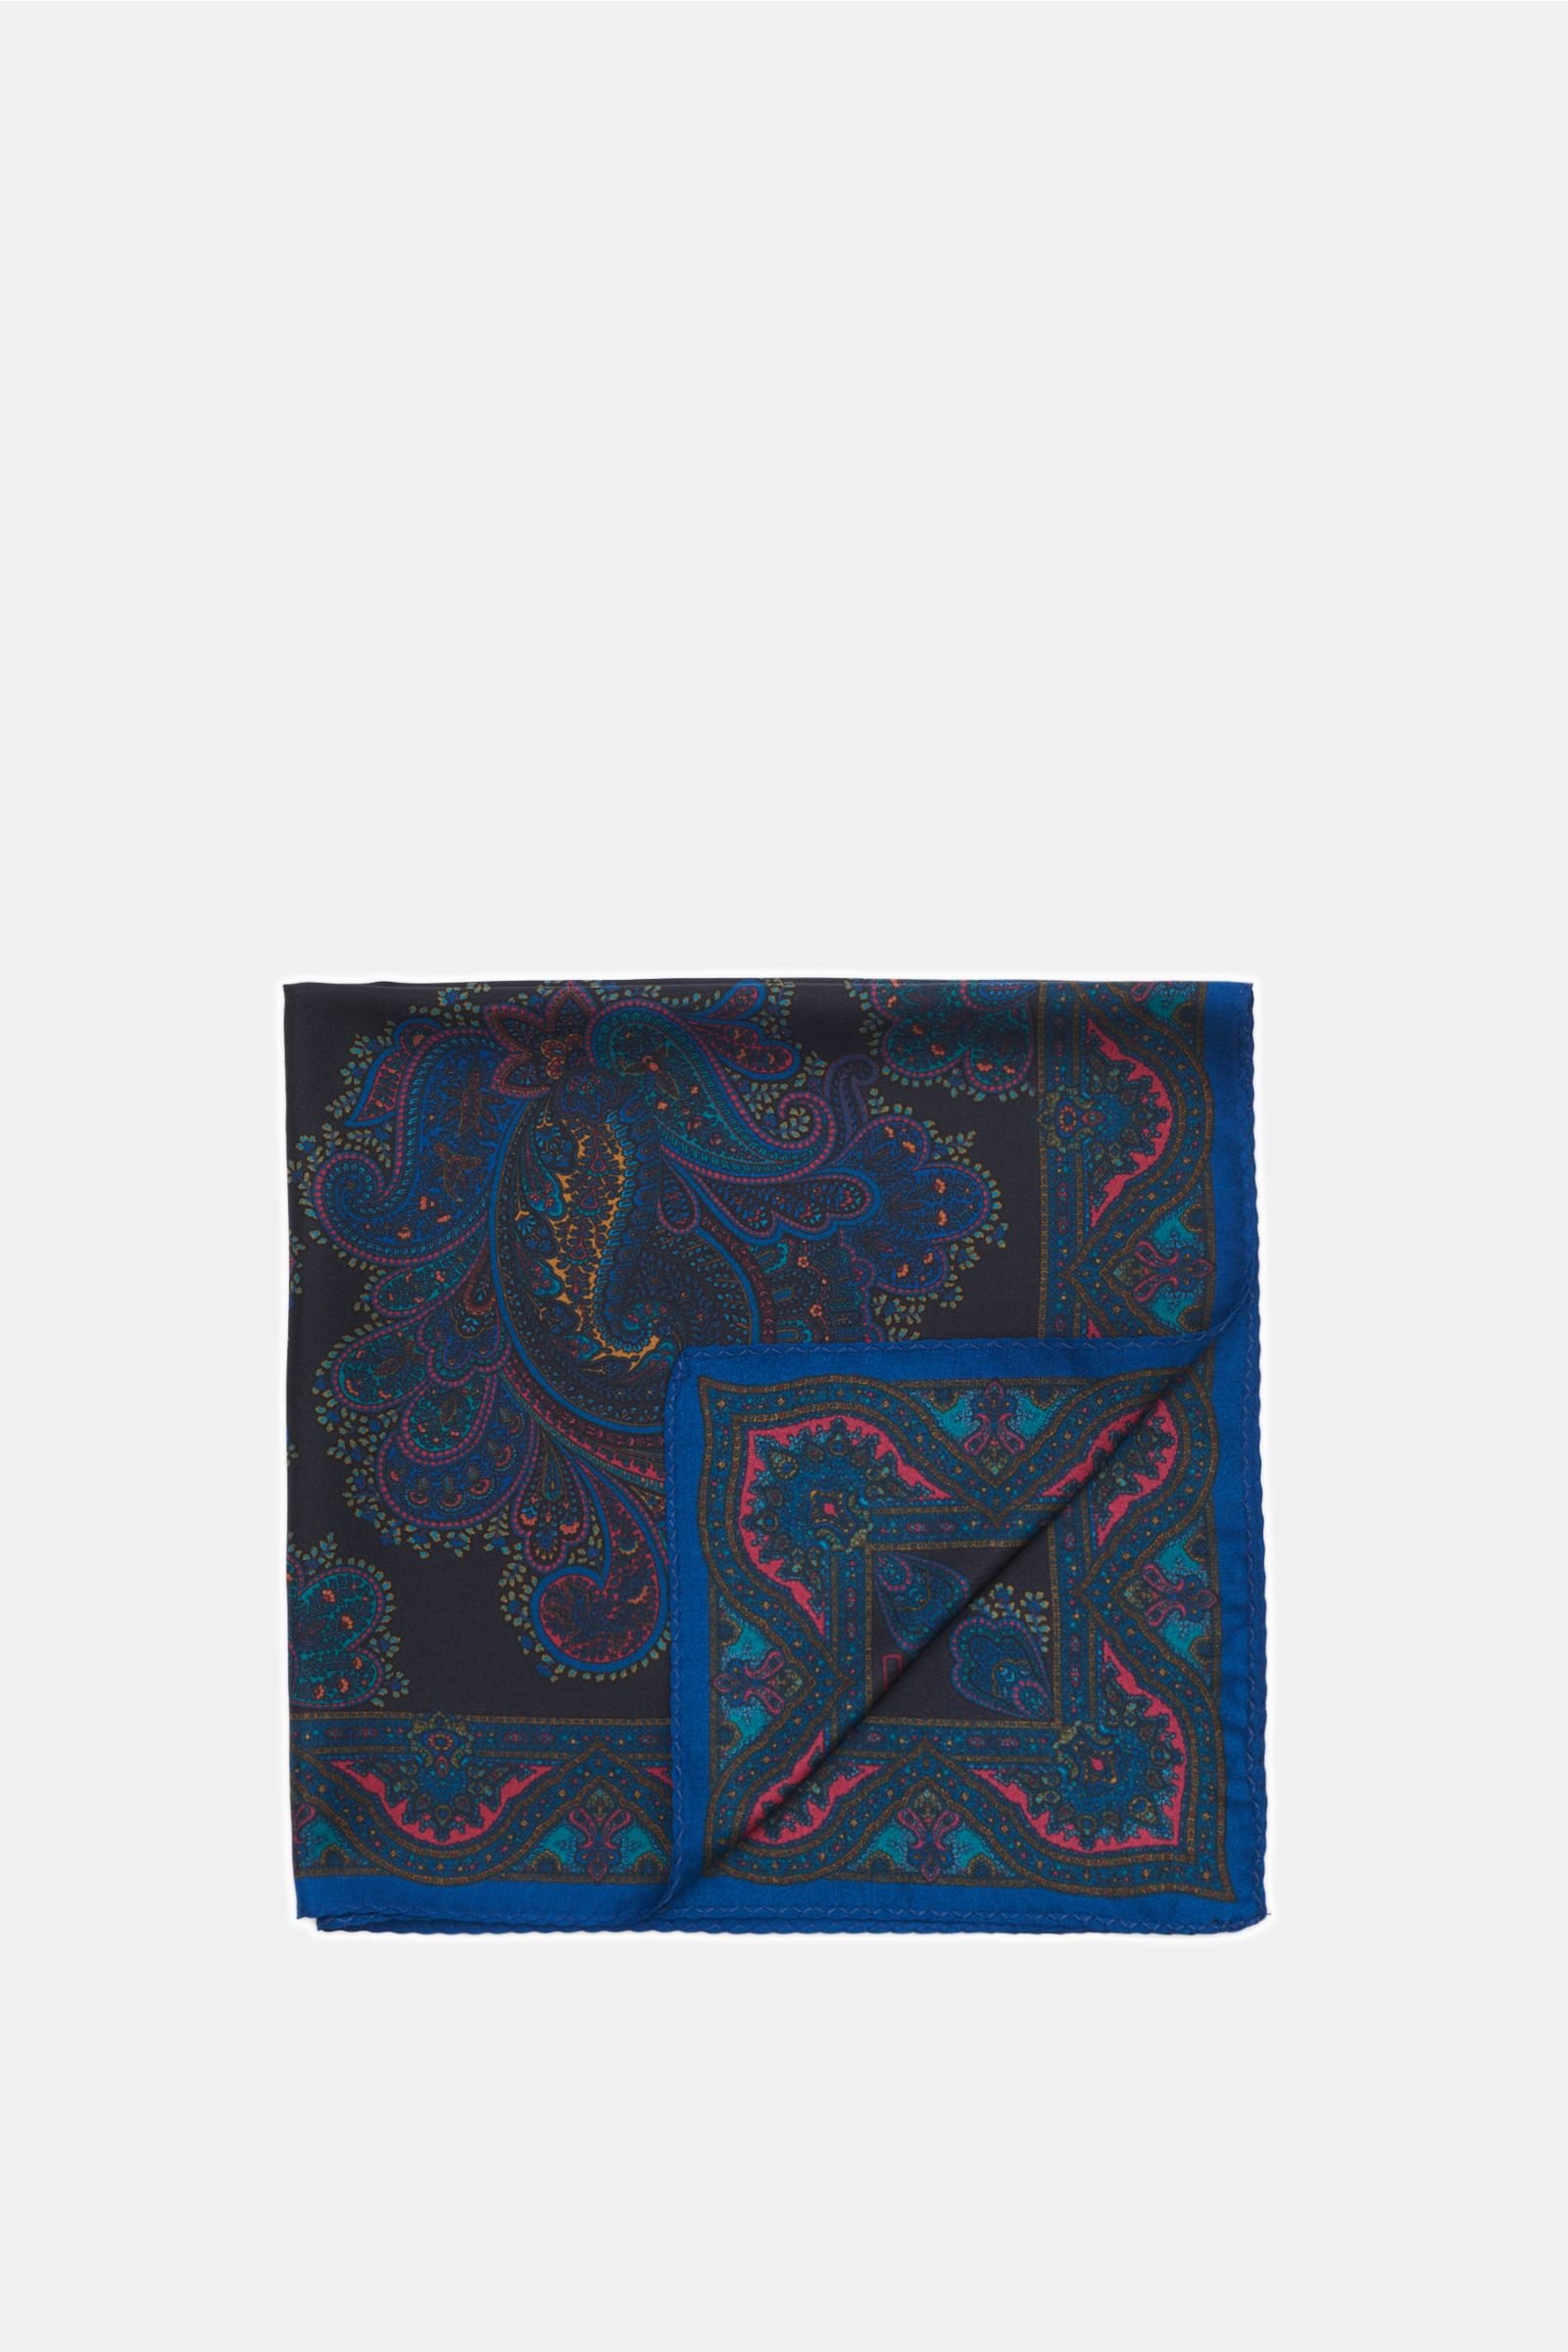 Pocket square navy/dark blue patterned